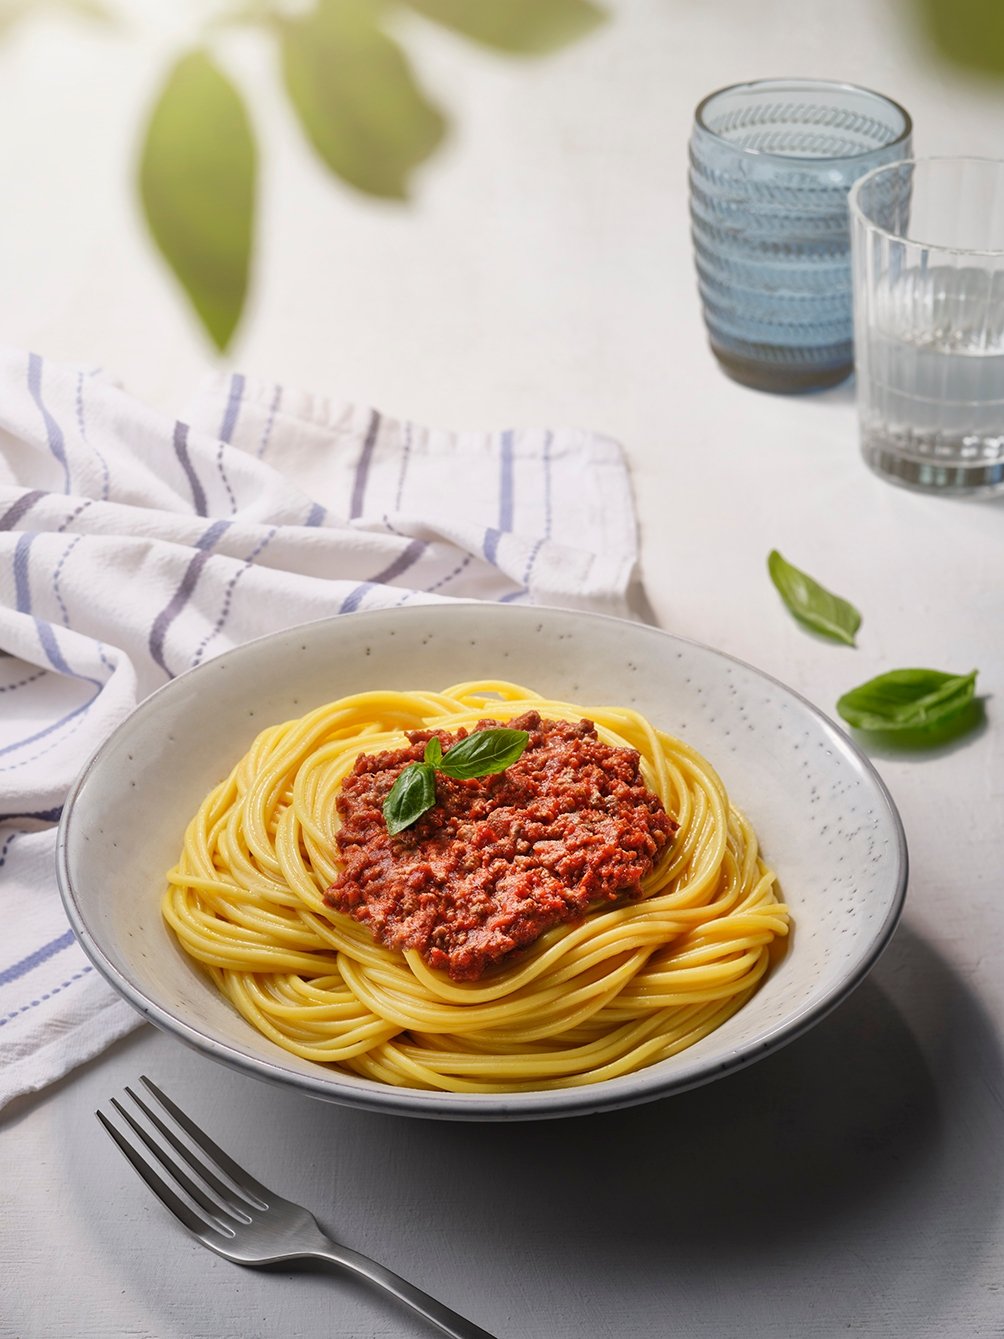 Italian spagetti bolognese in Dubai restaurant